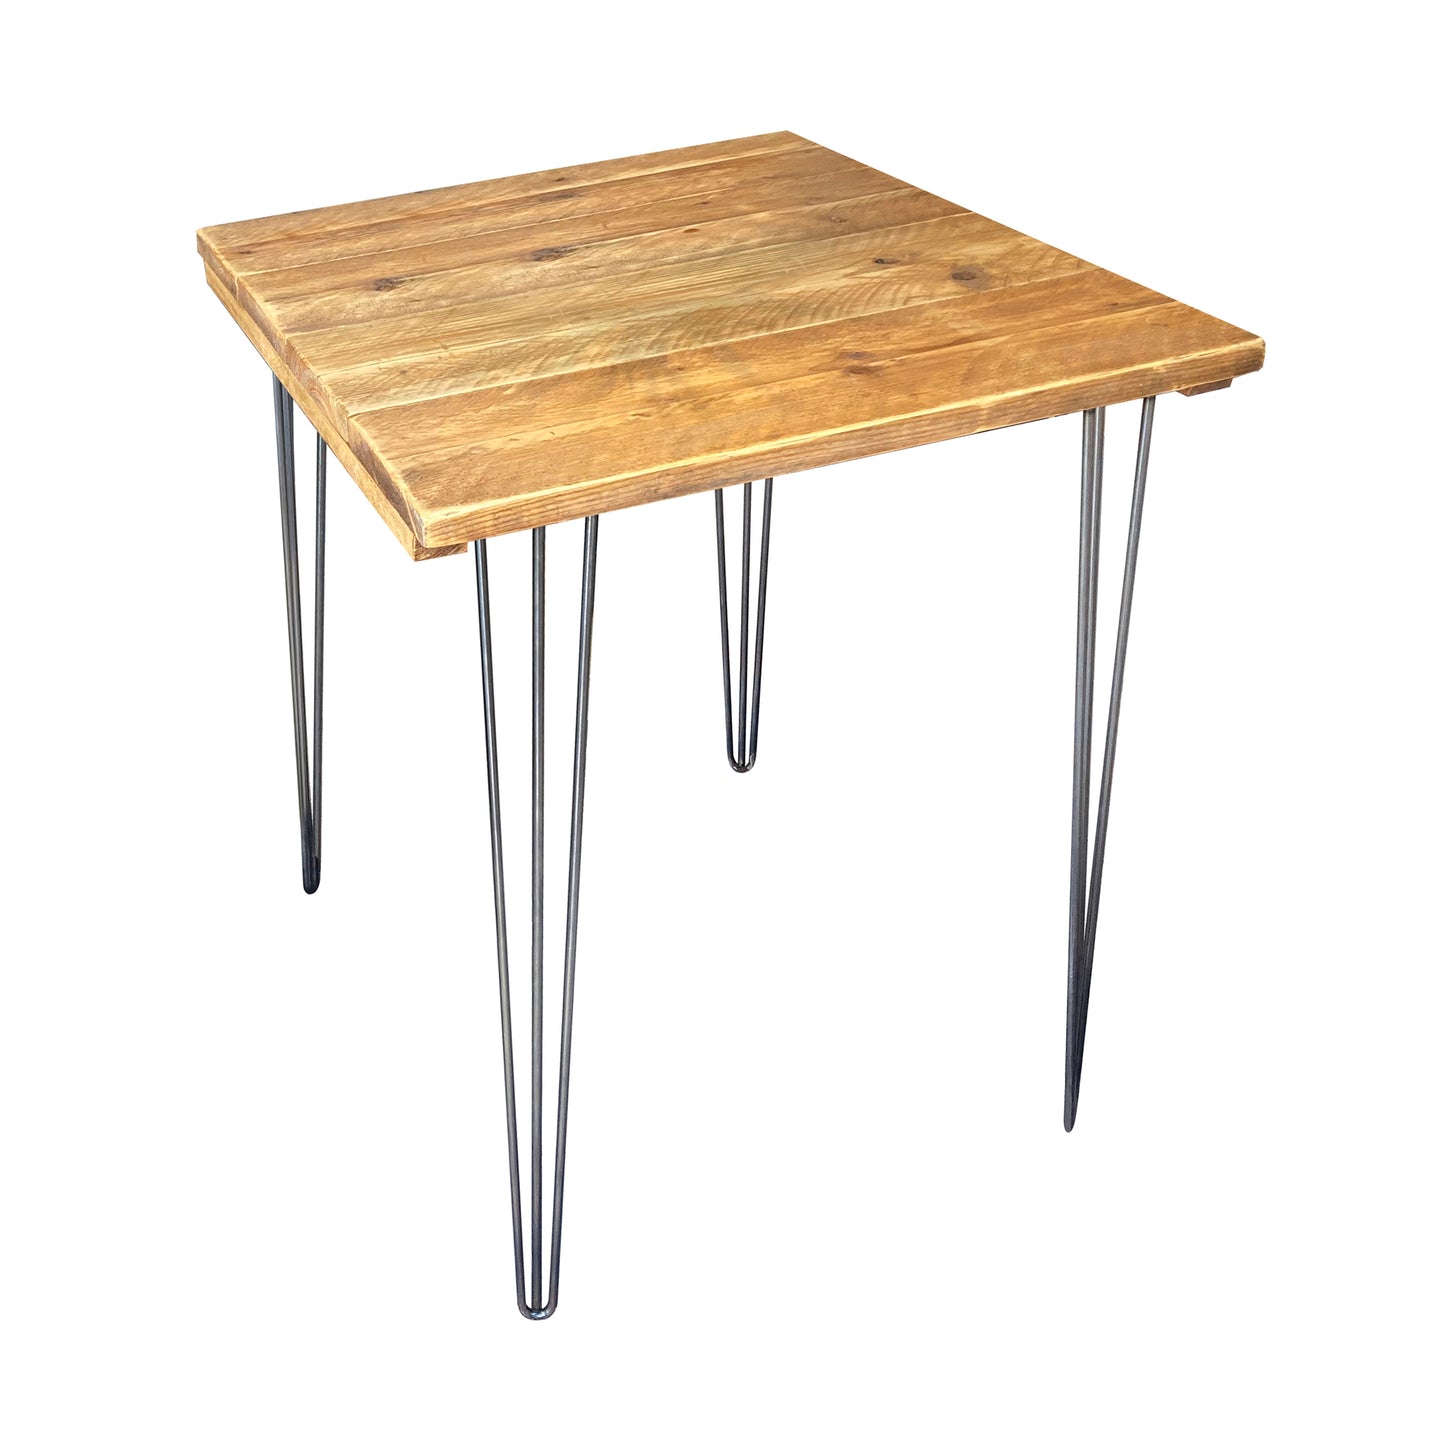 1. Indoor Reclaimed Scaffold Board Poseur Tables